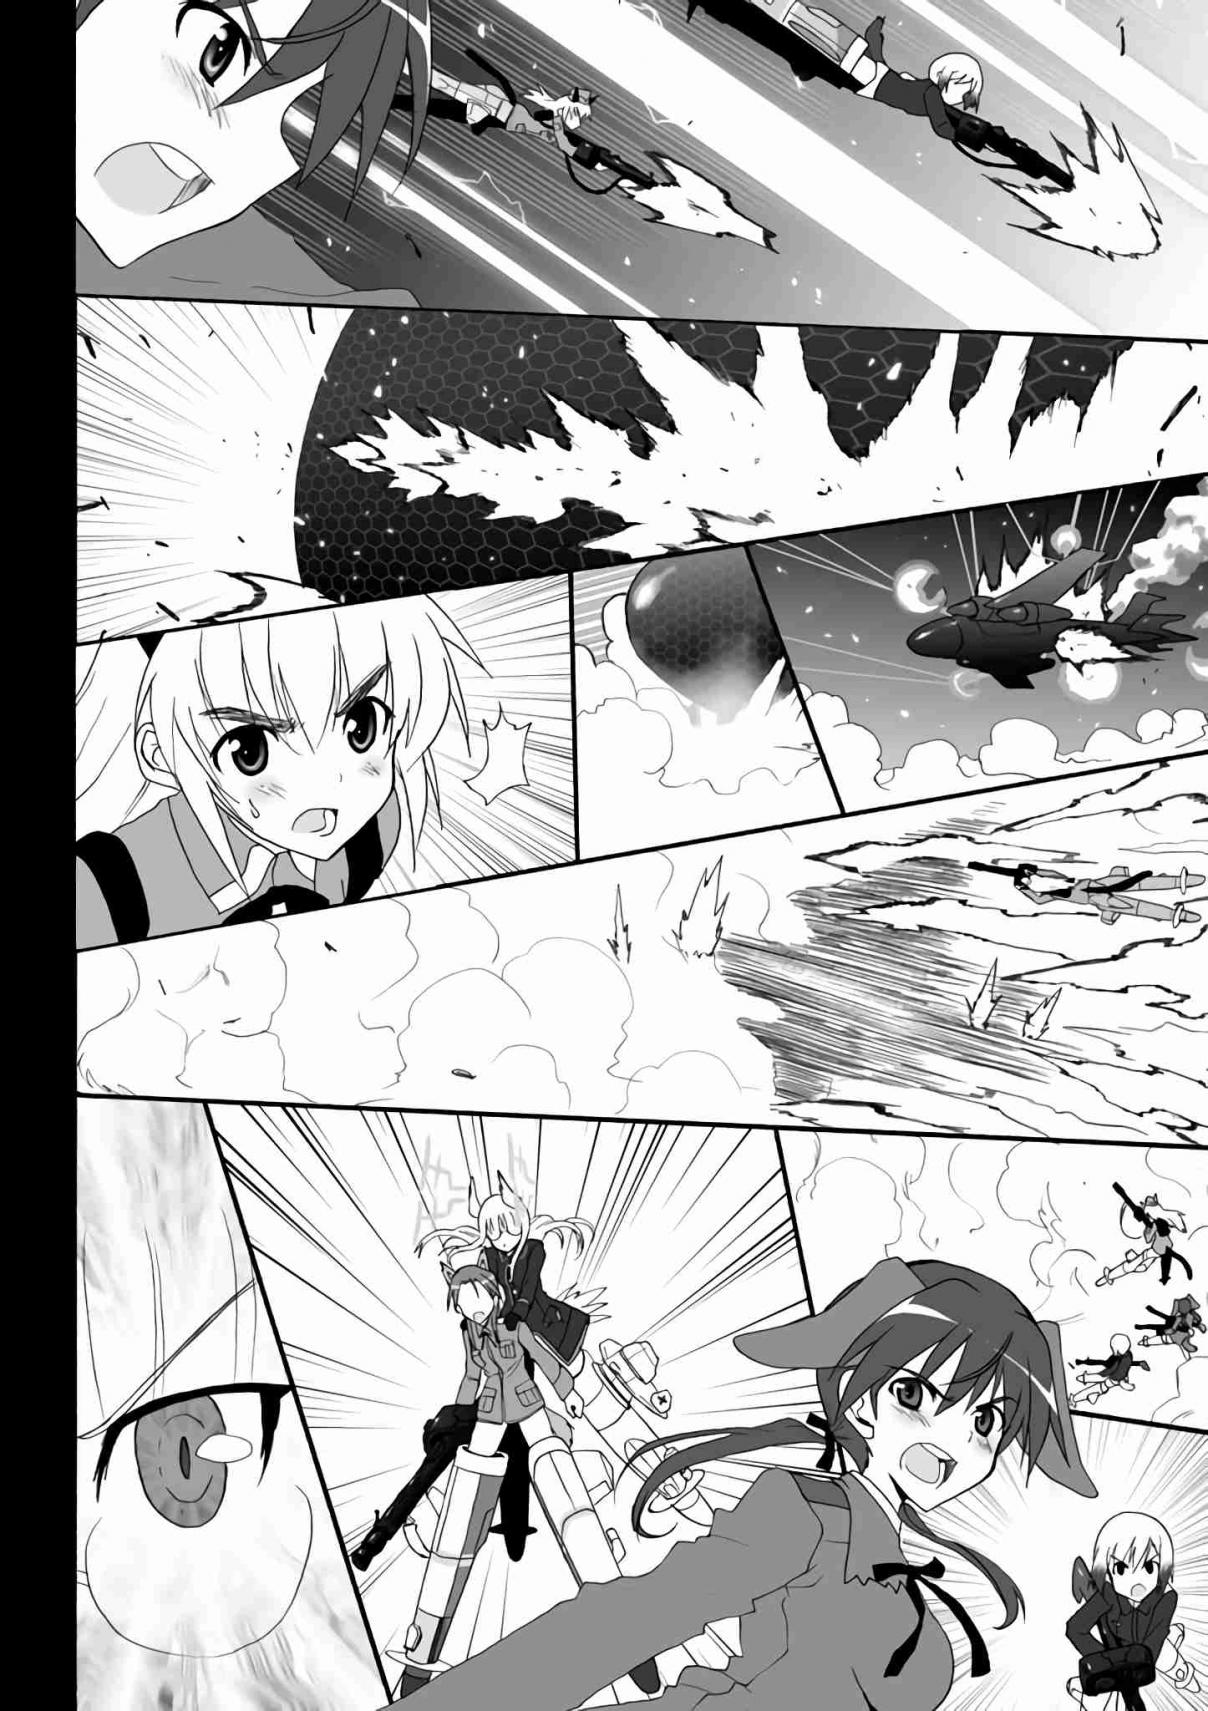 Strike Witches Kimi to Tsunagaru Sora Vol. 1 Ch. 6 The Karlslandian Ghost (2)